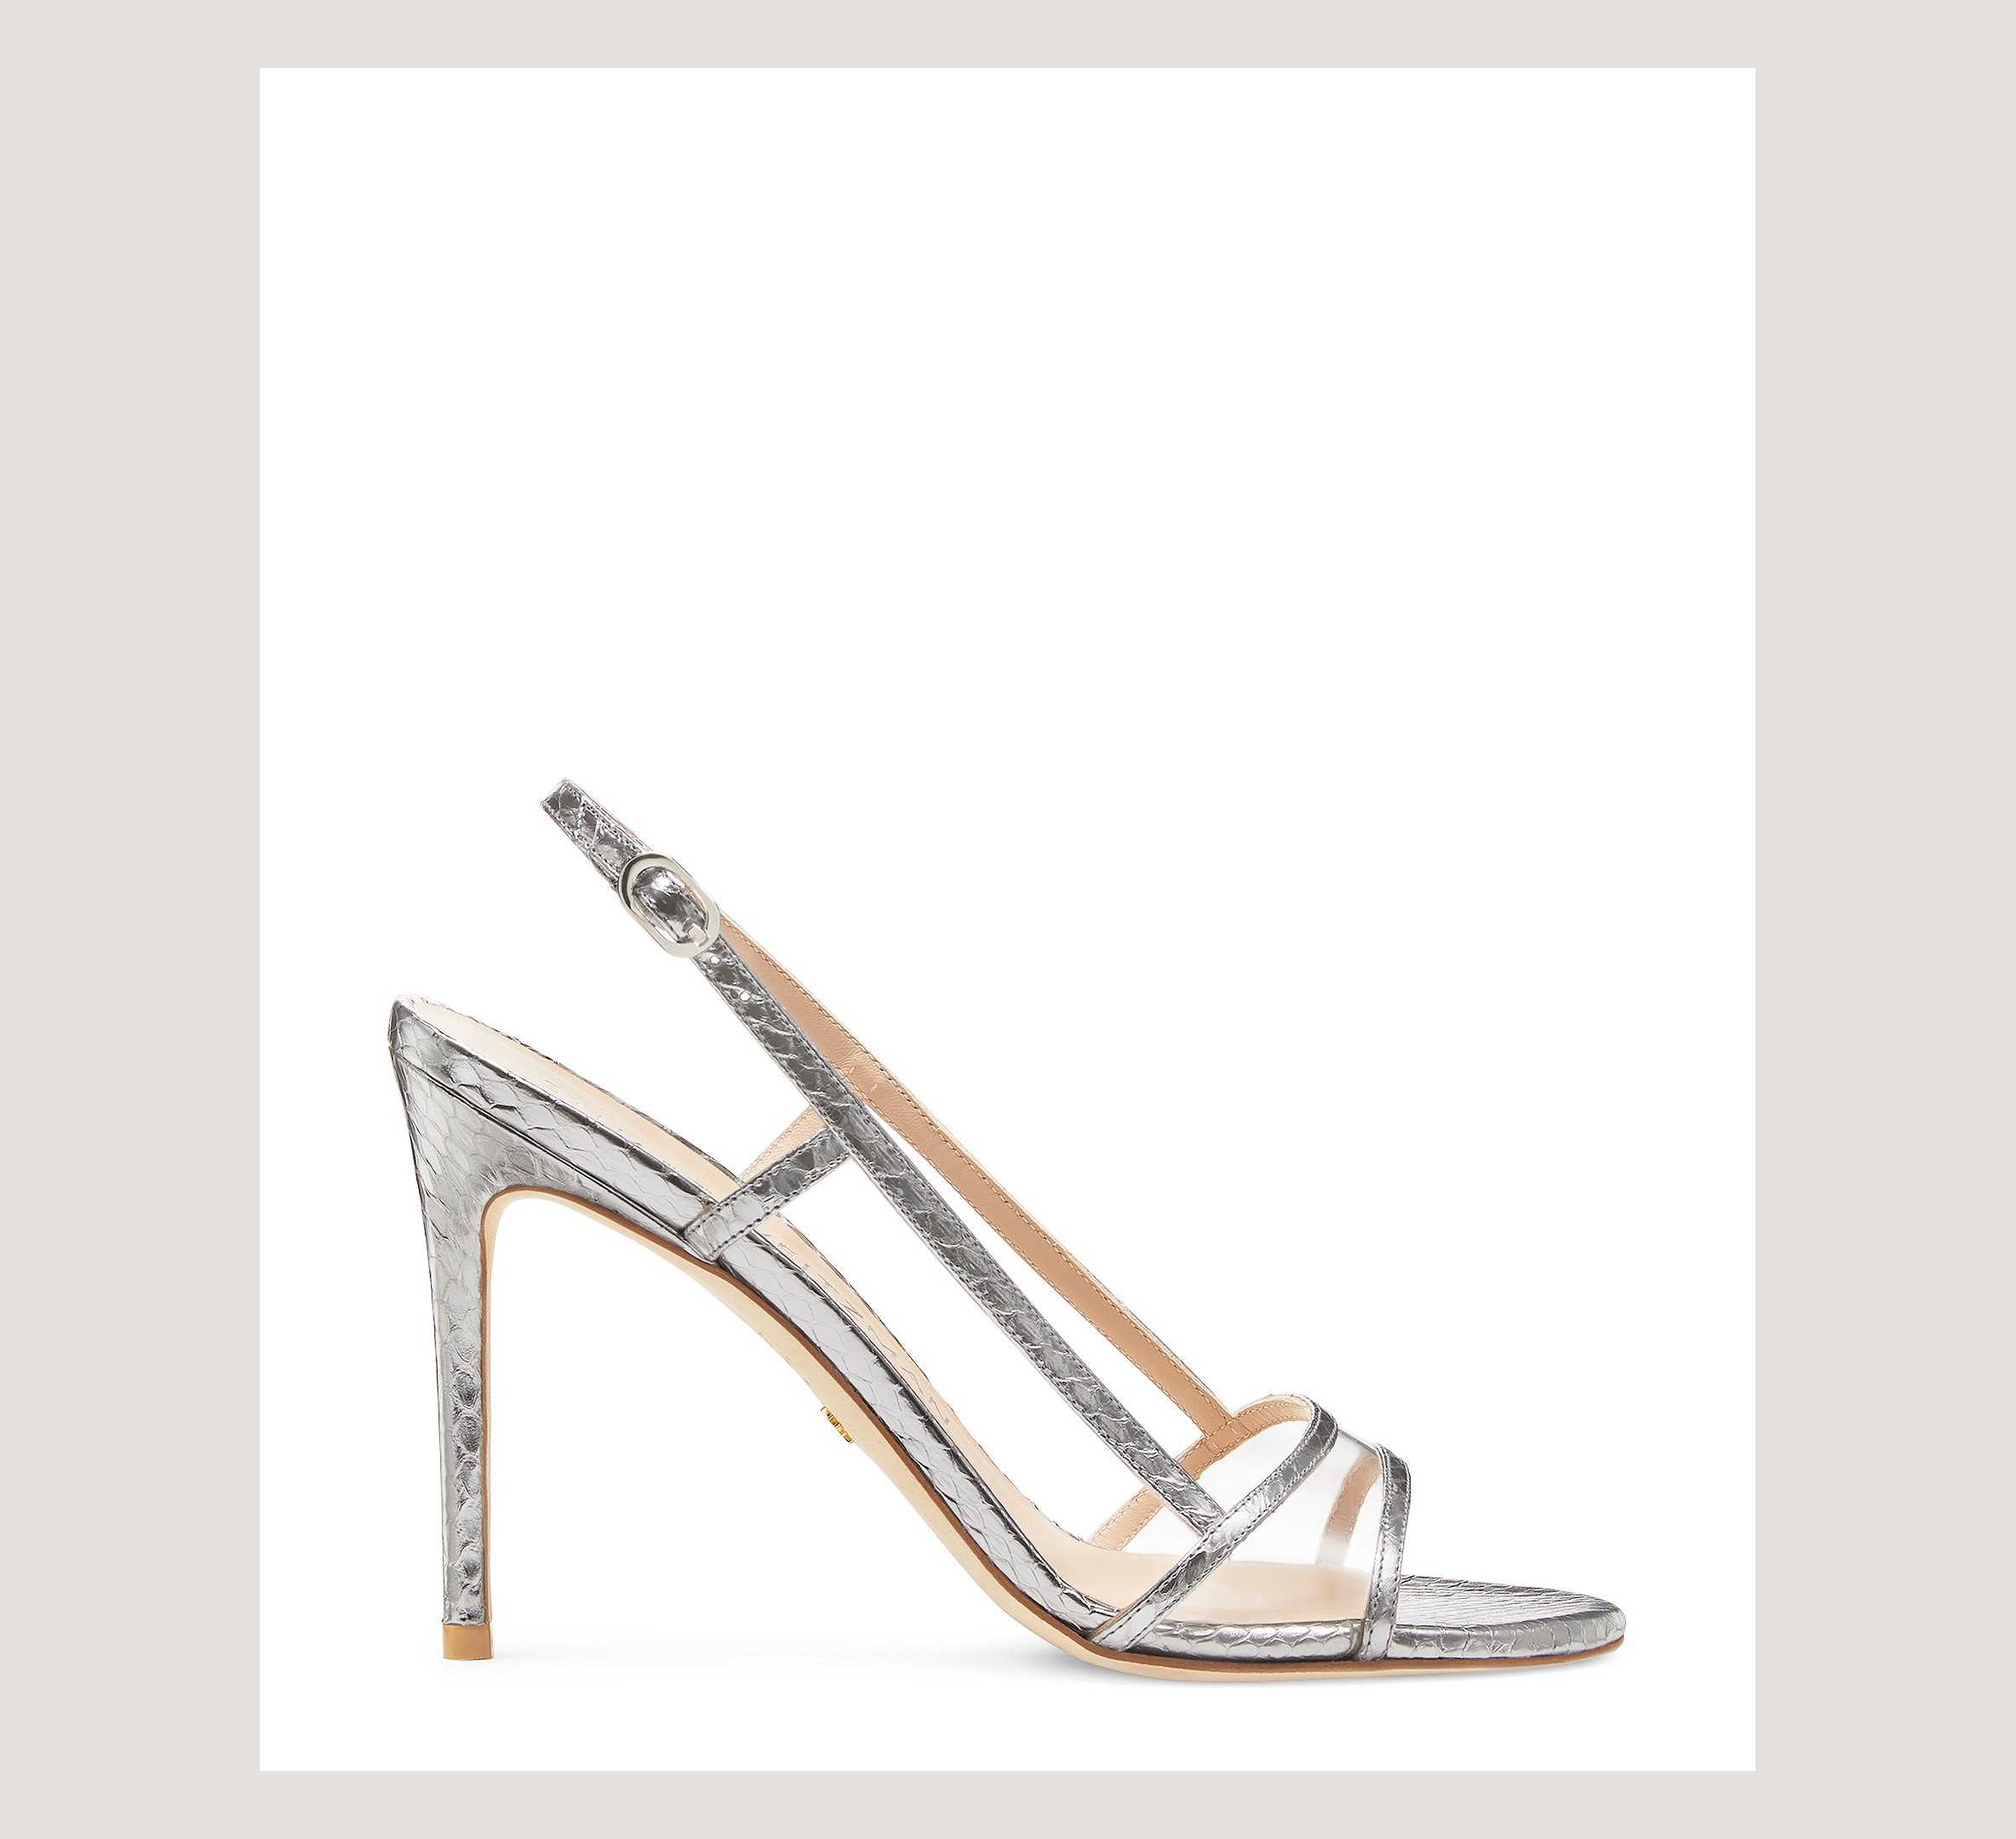 Stuart Weitzman Mondrian 100 Sandal High Heel Sandals In Silver & Clear